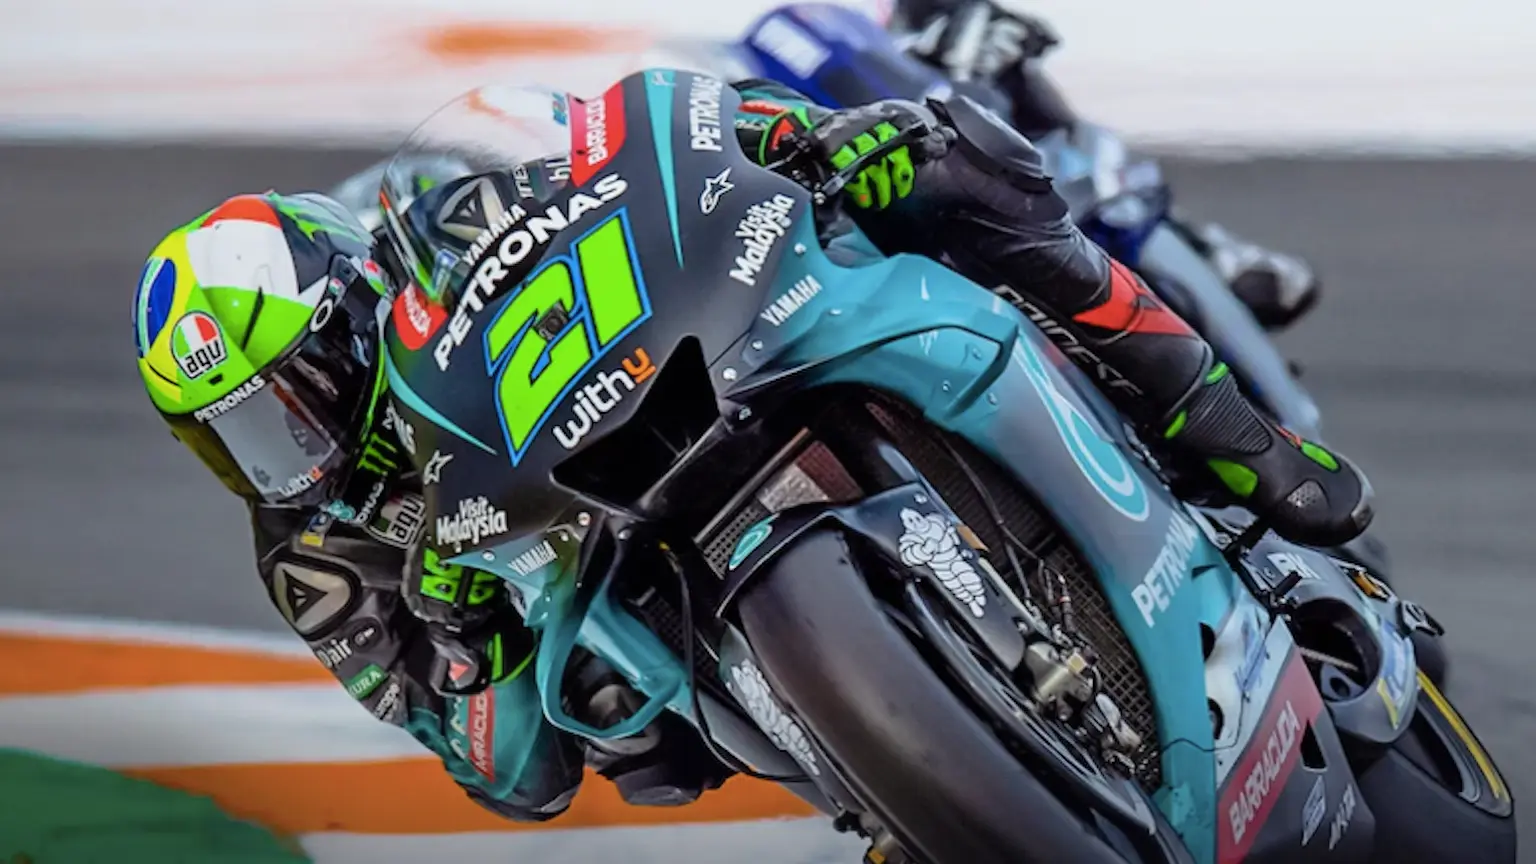 2019 MotoGP, Moto2 and Moto3 Championships